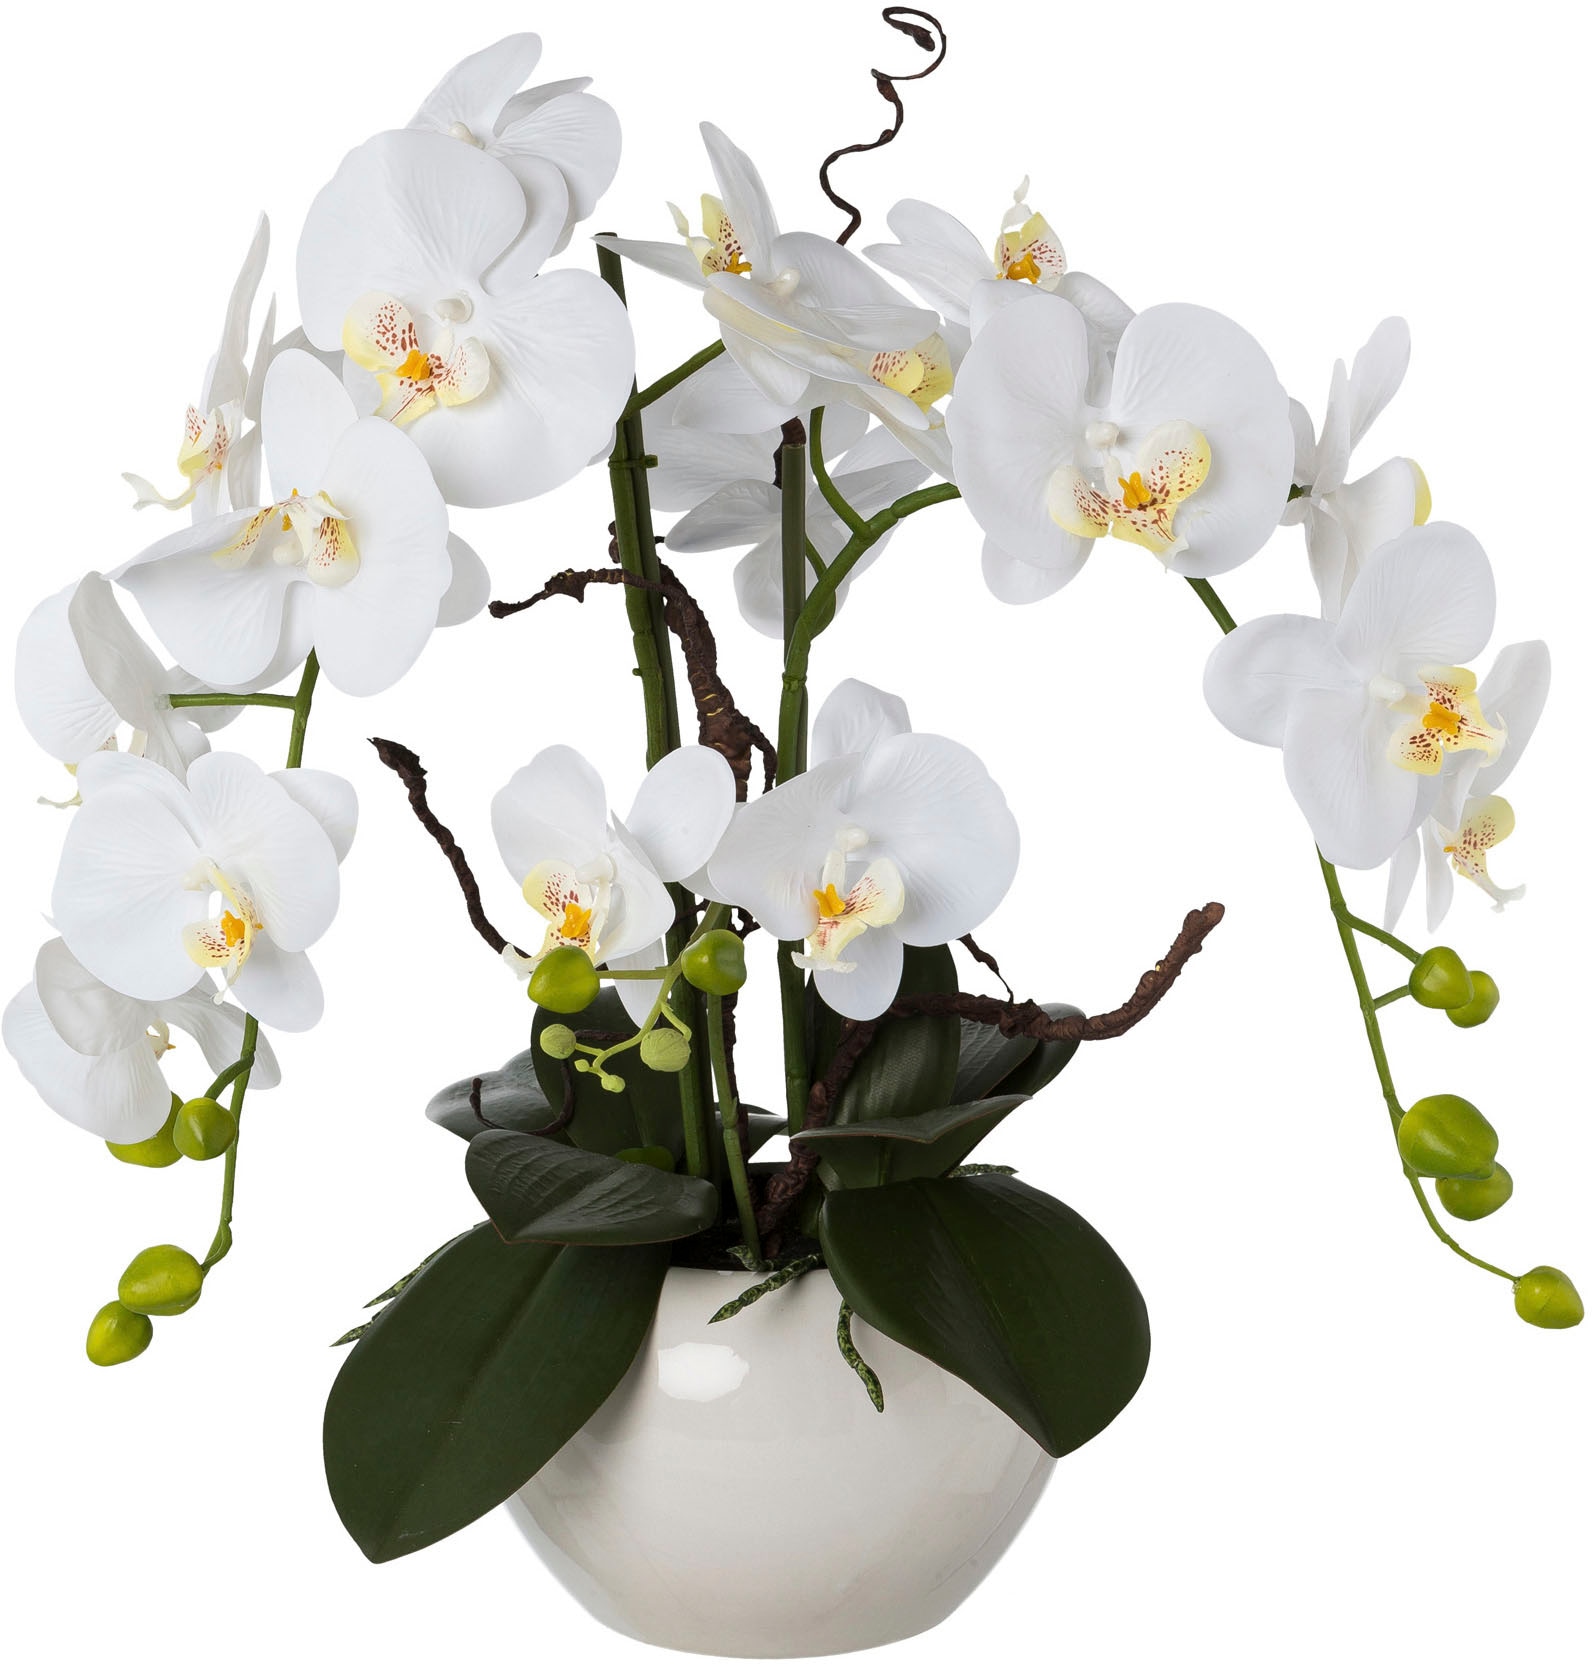 St.), OTTO I.GE.A. »Orchidee«, aus Keramik (1 Kunstblume bei Antik-Schale in